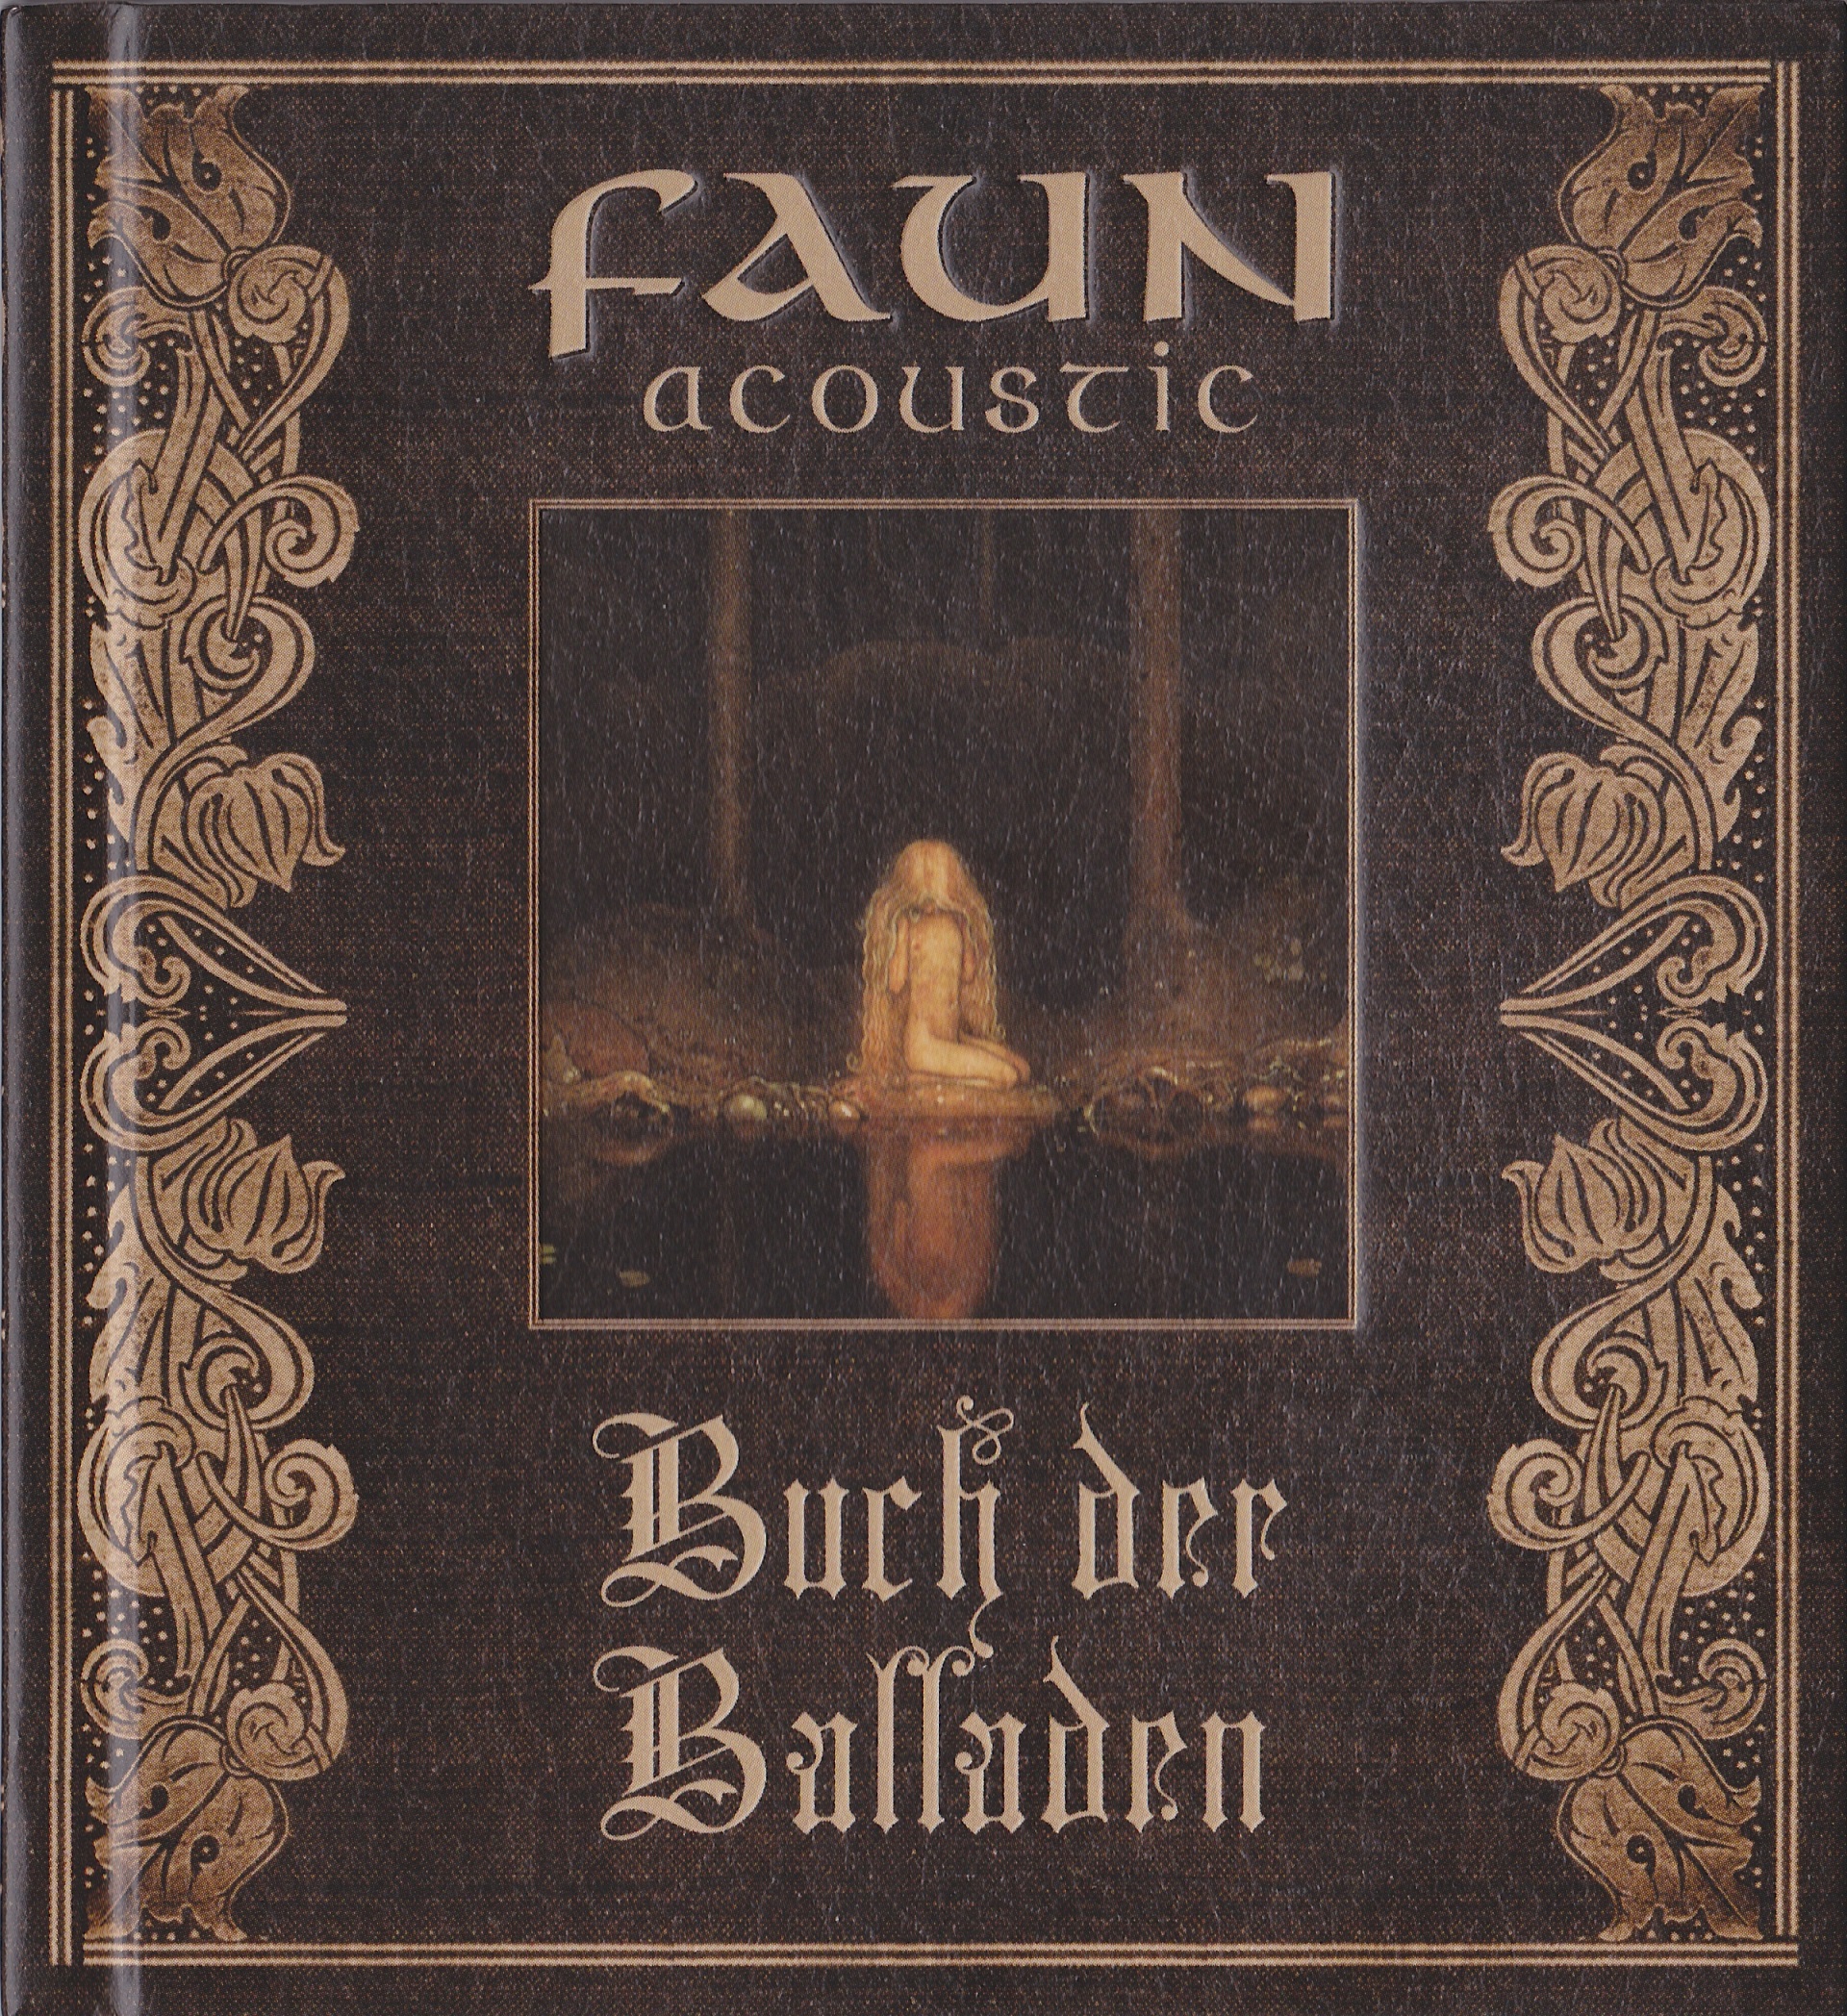 Faun - Acoustic - Buch Der Balladen